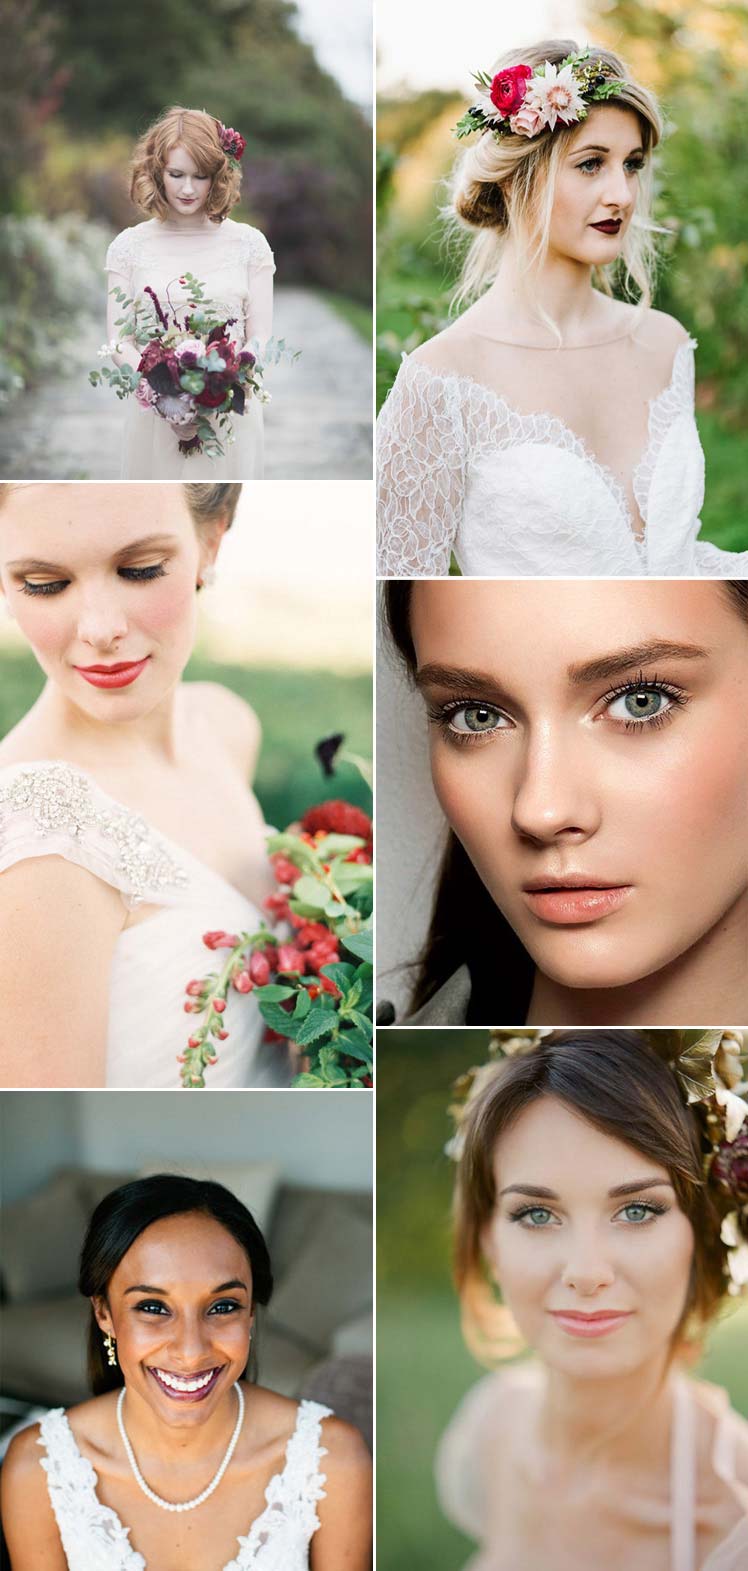 Wedding day make-up inspiration for Autumn brides